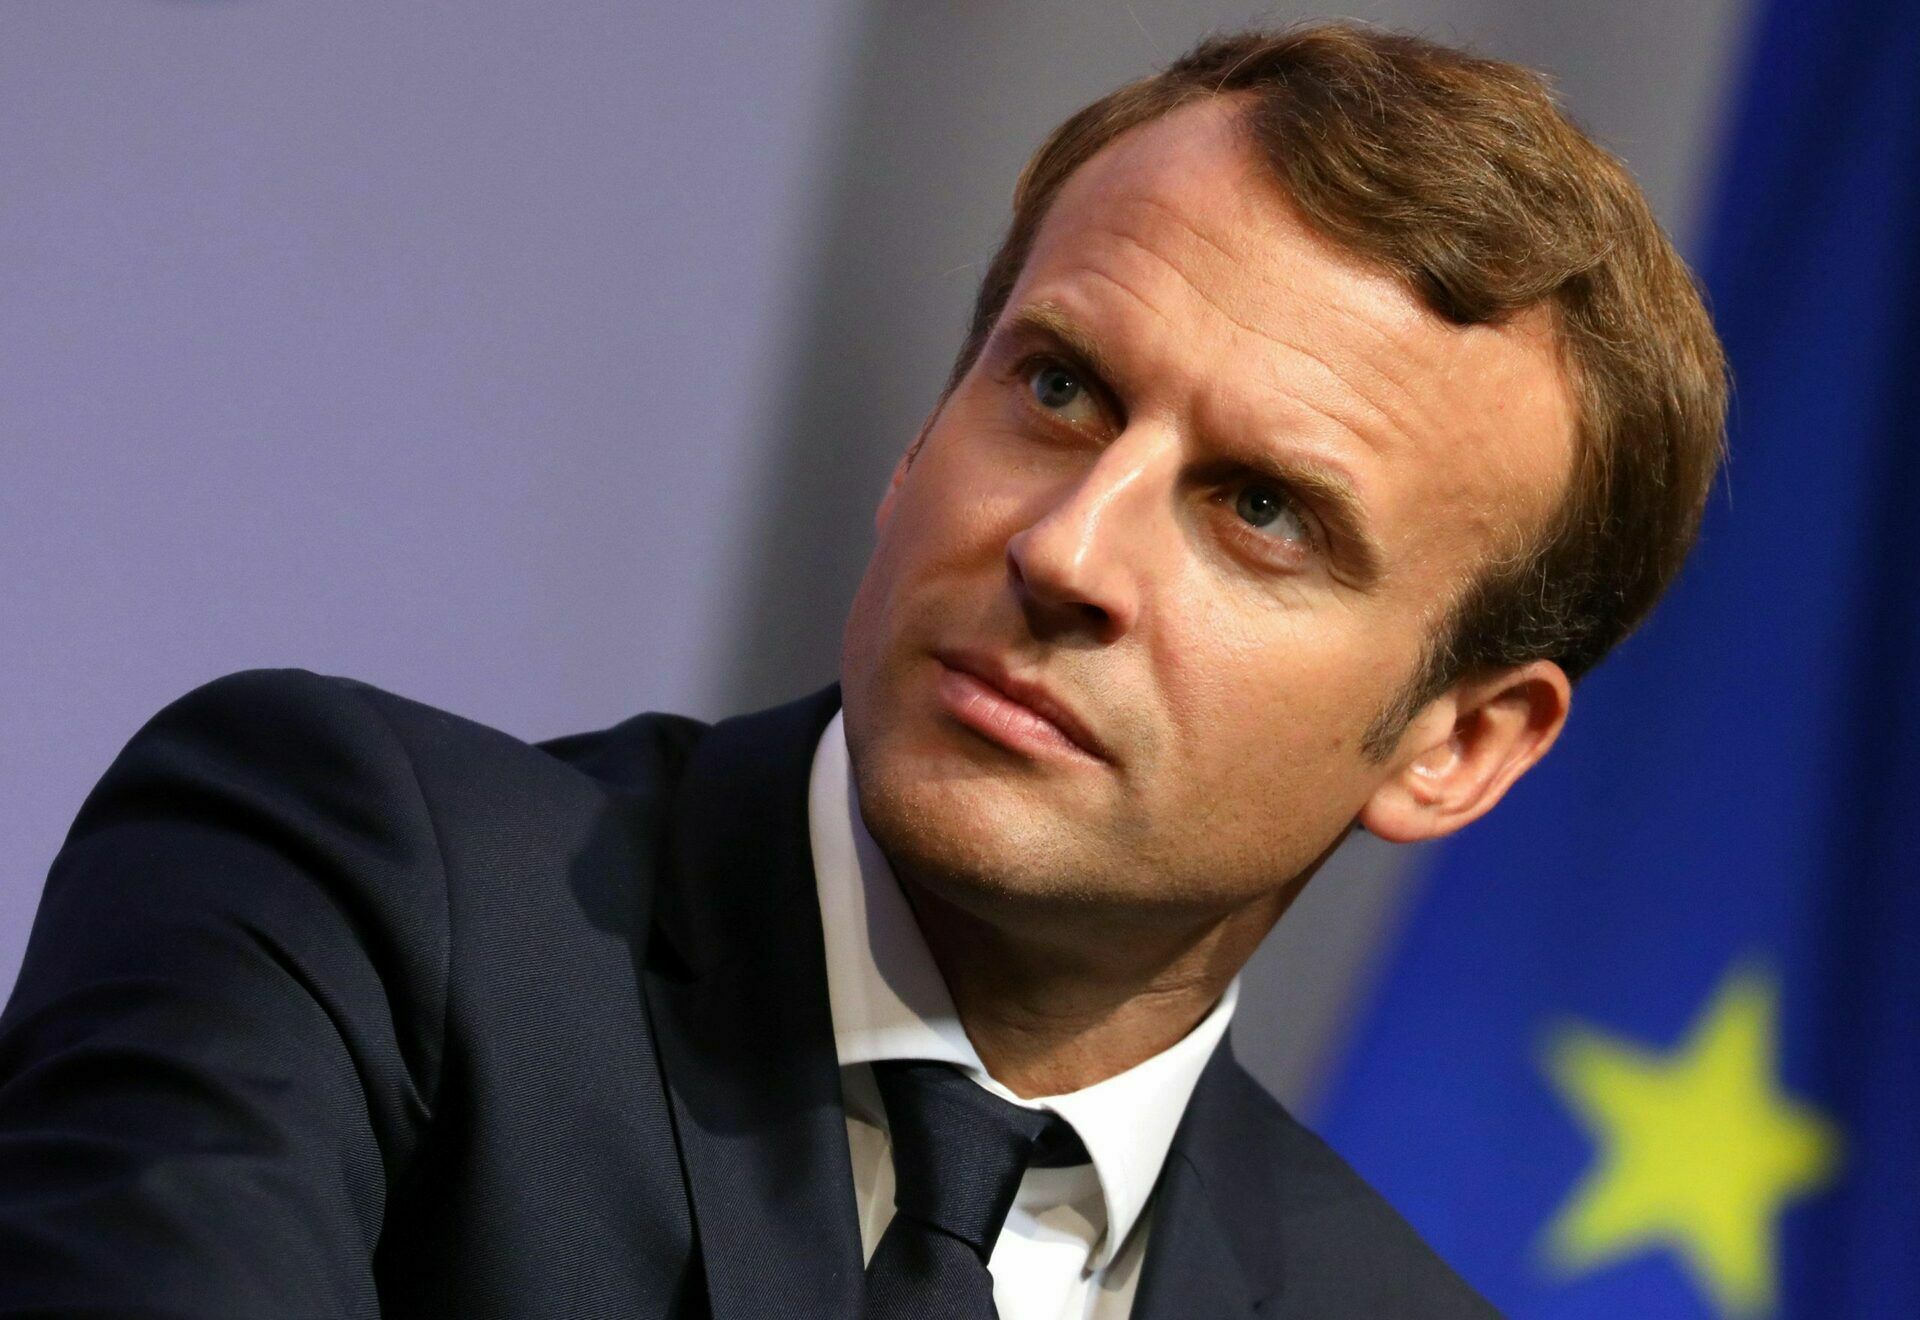 Emmanuel Macron is ready to supply heavy weapons to Kiev